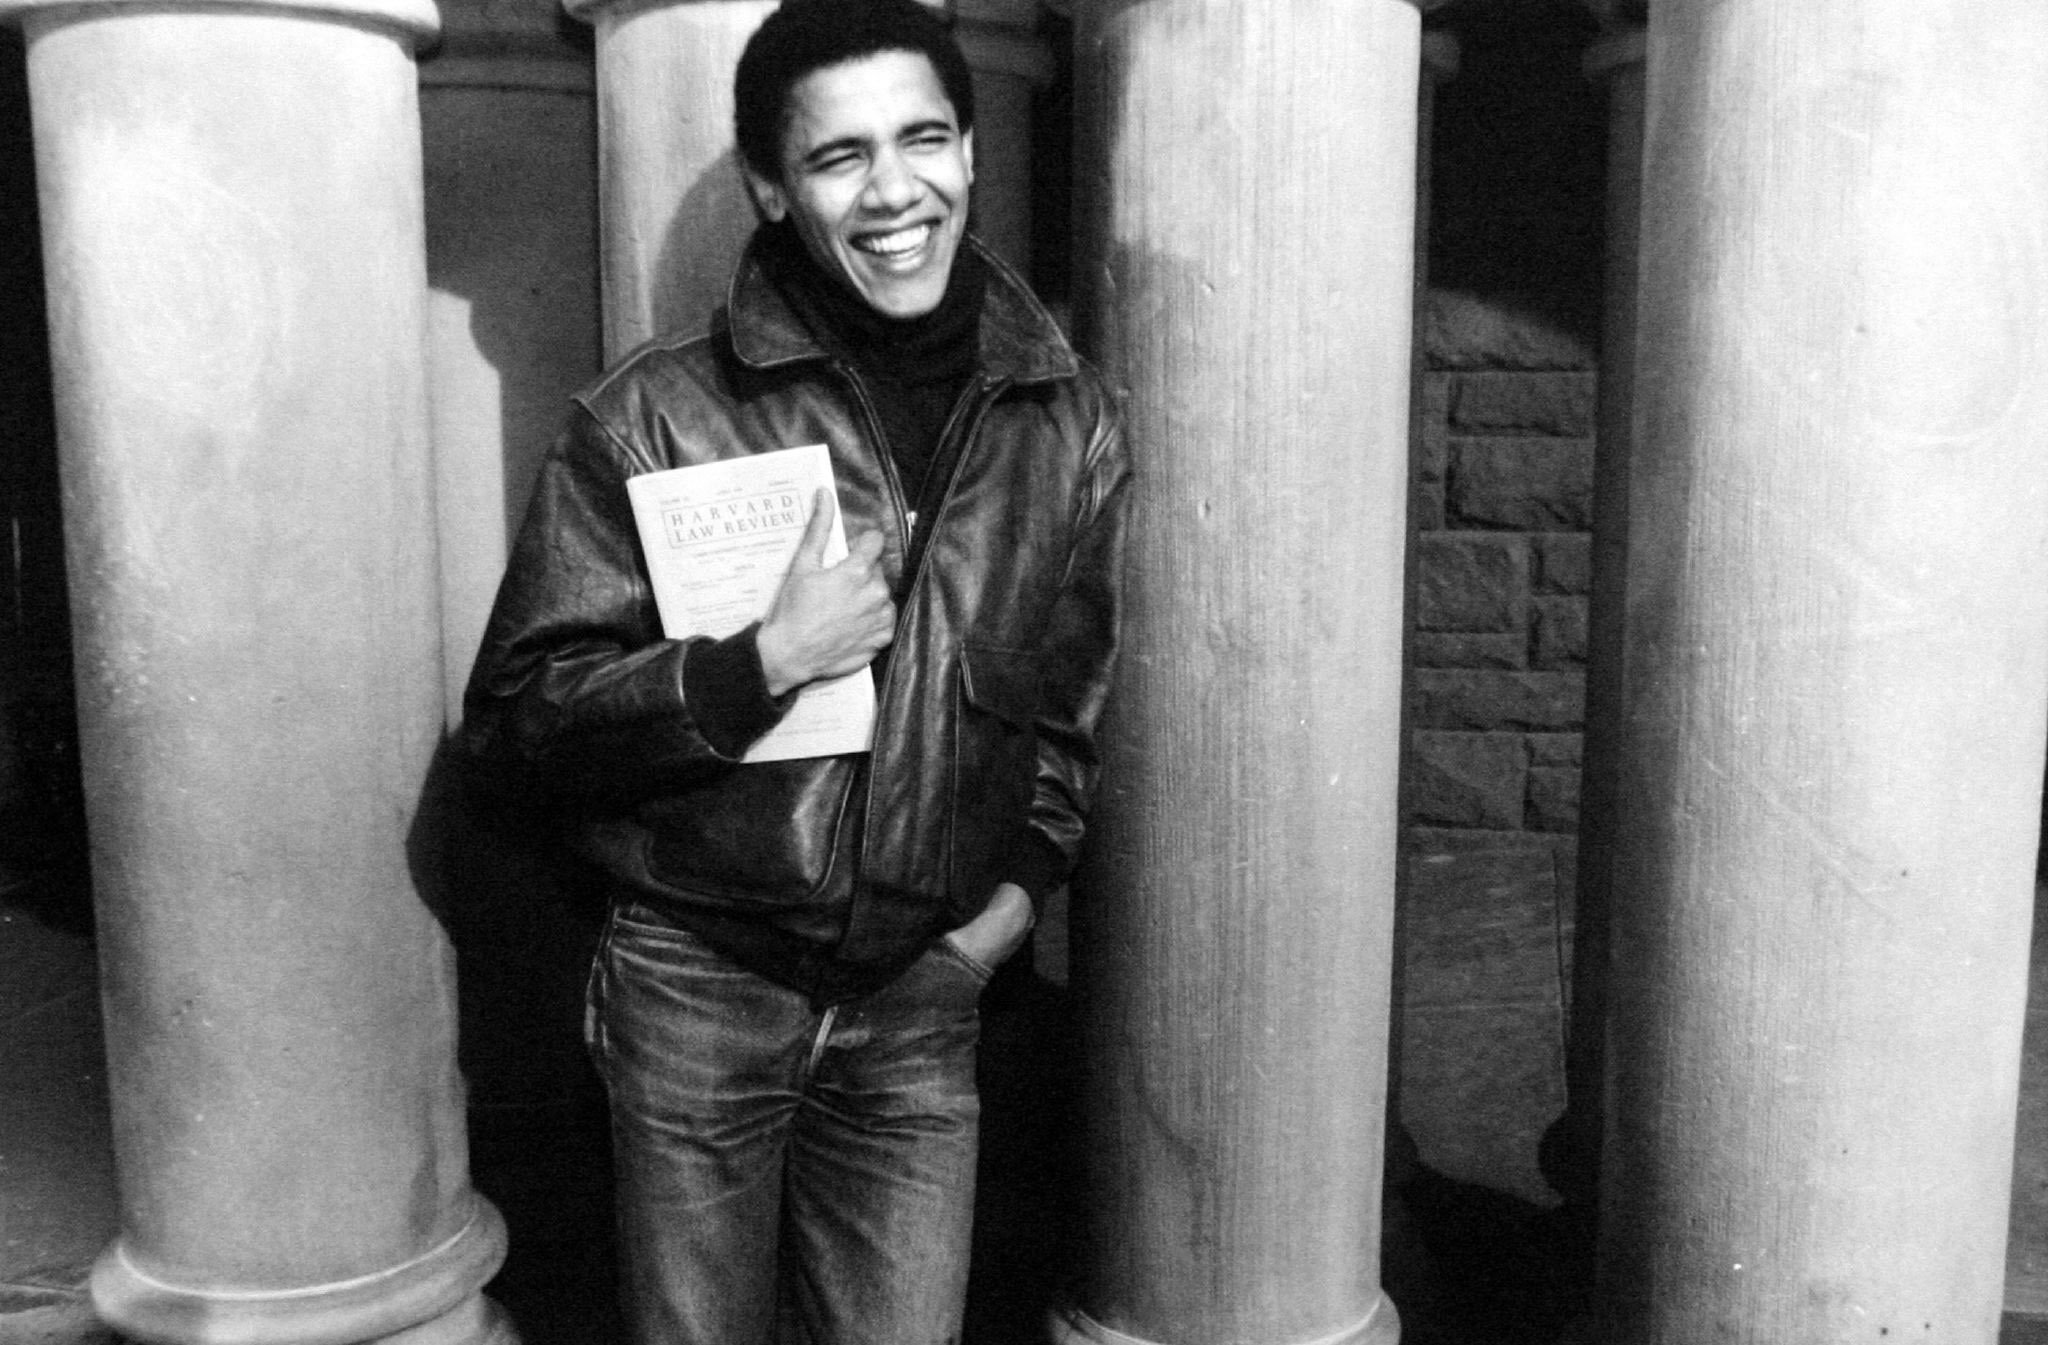 Barack Obama as student at Harvard university, c. 1992 l Source: Getty Images